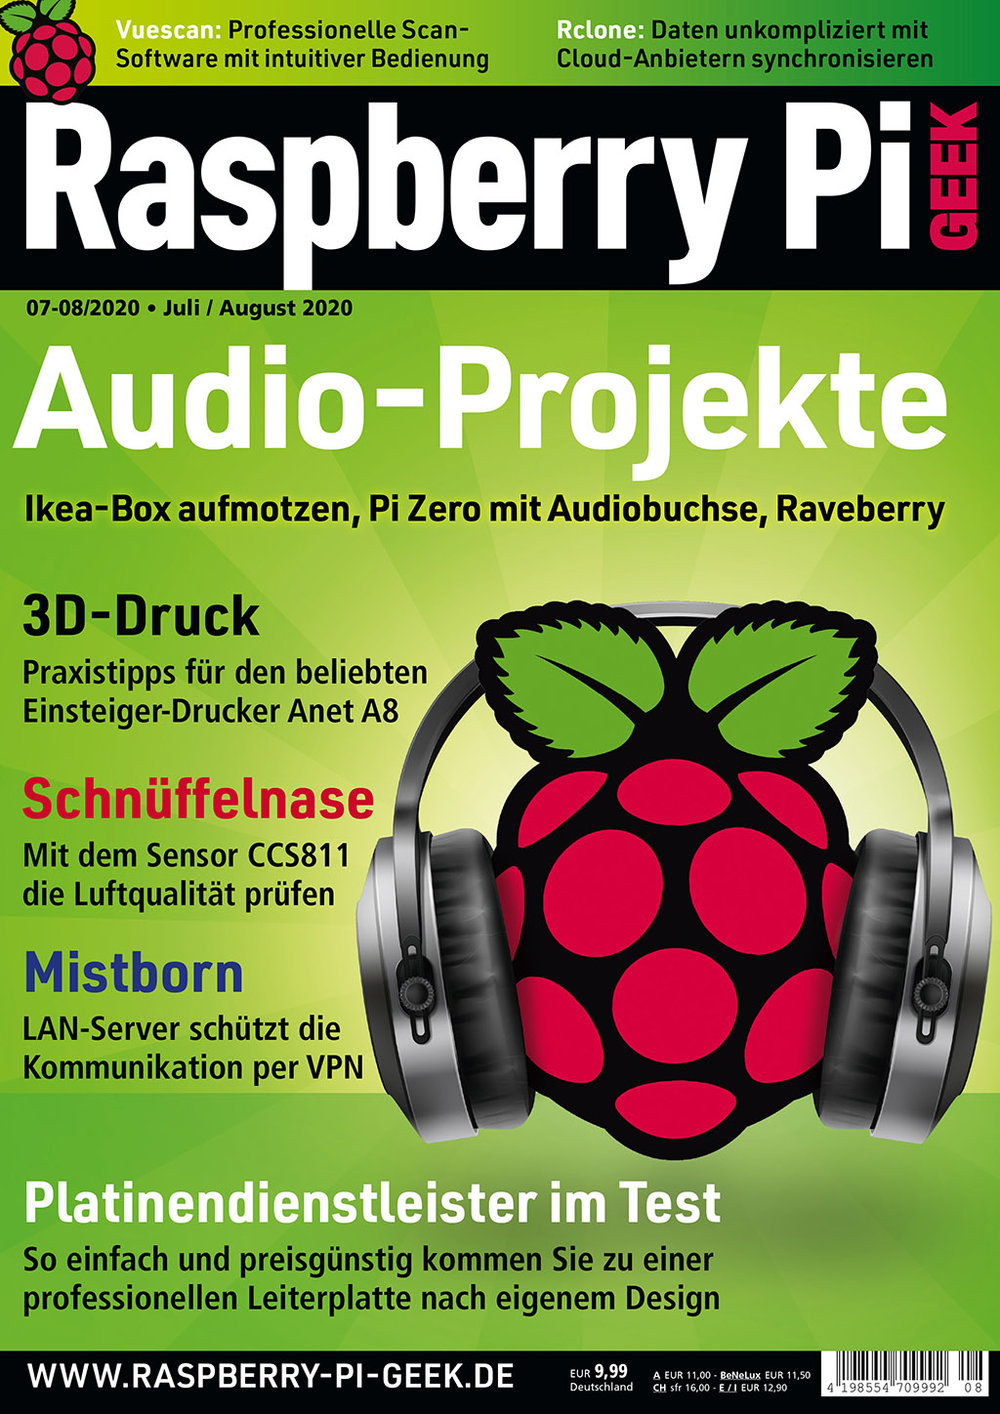 Raspberry Pi Geek ePaper 07-08/2020